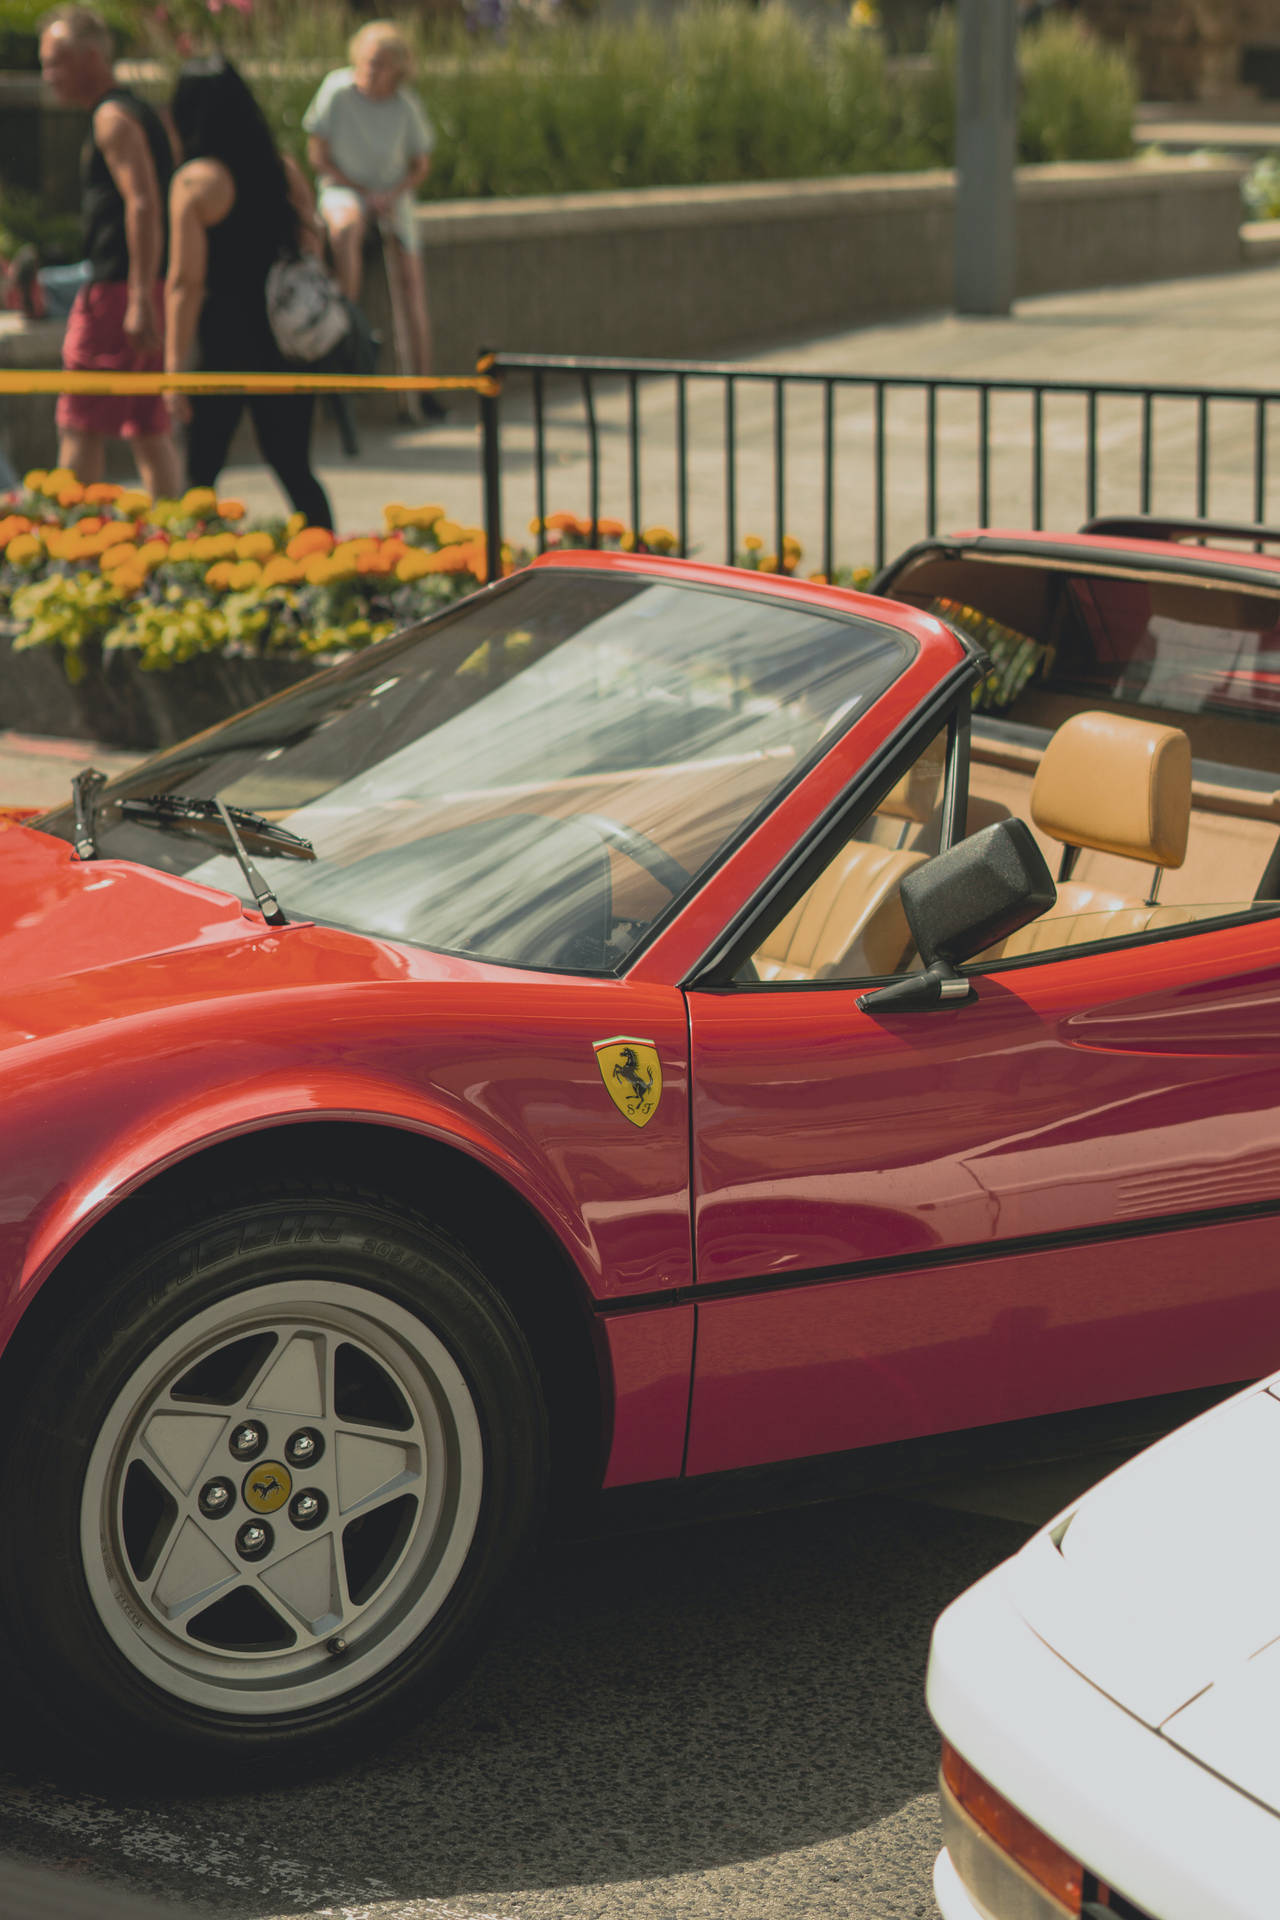 Caption: Stunning Ferrari Showcasing The Vivid Clarity Of The Iphone 11 Pro Max 4k Resolution.